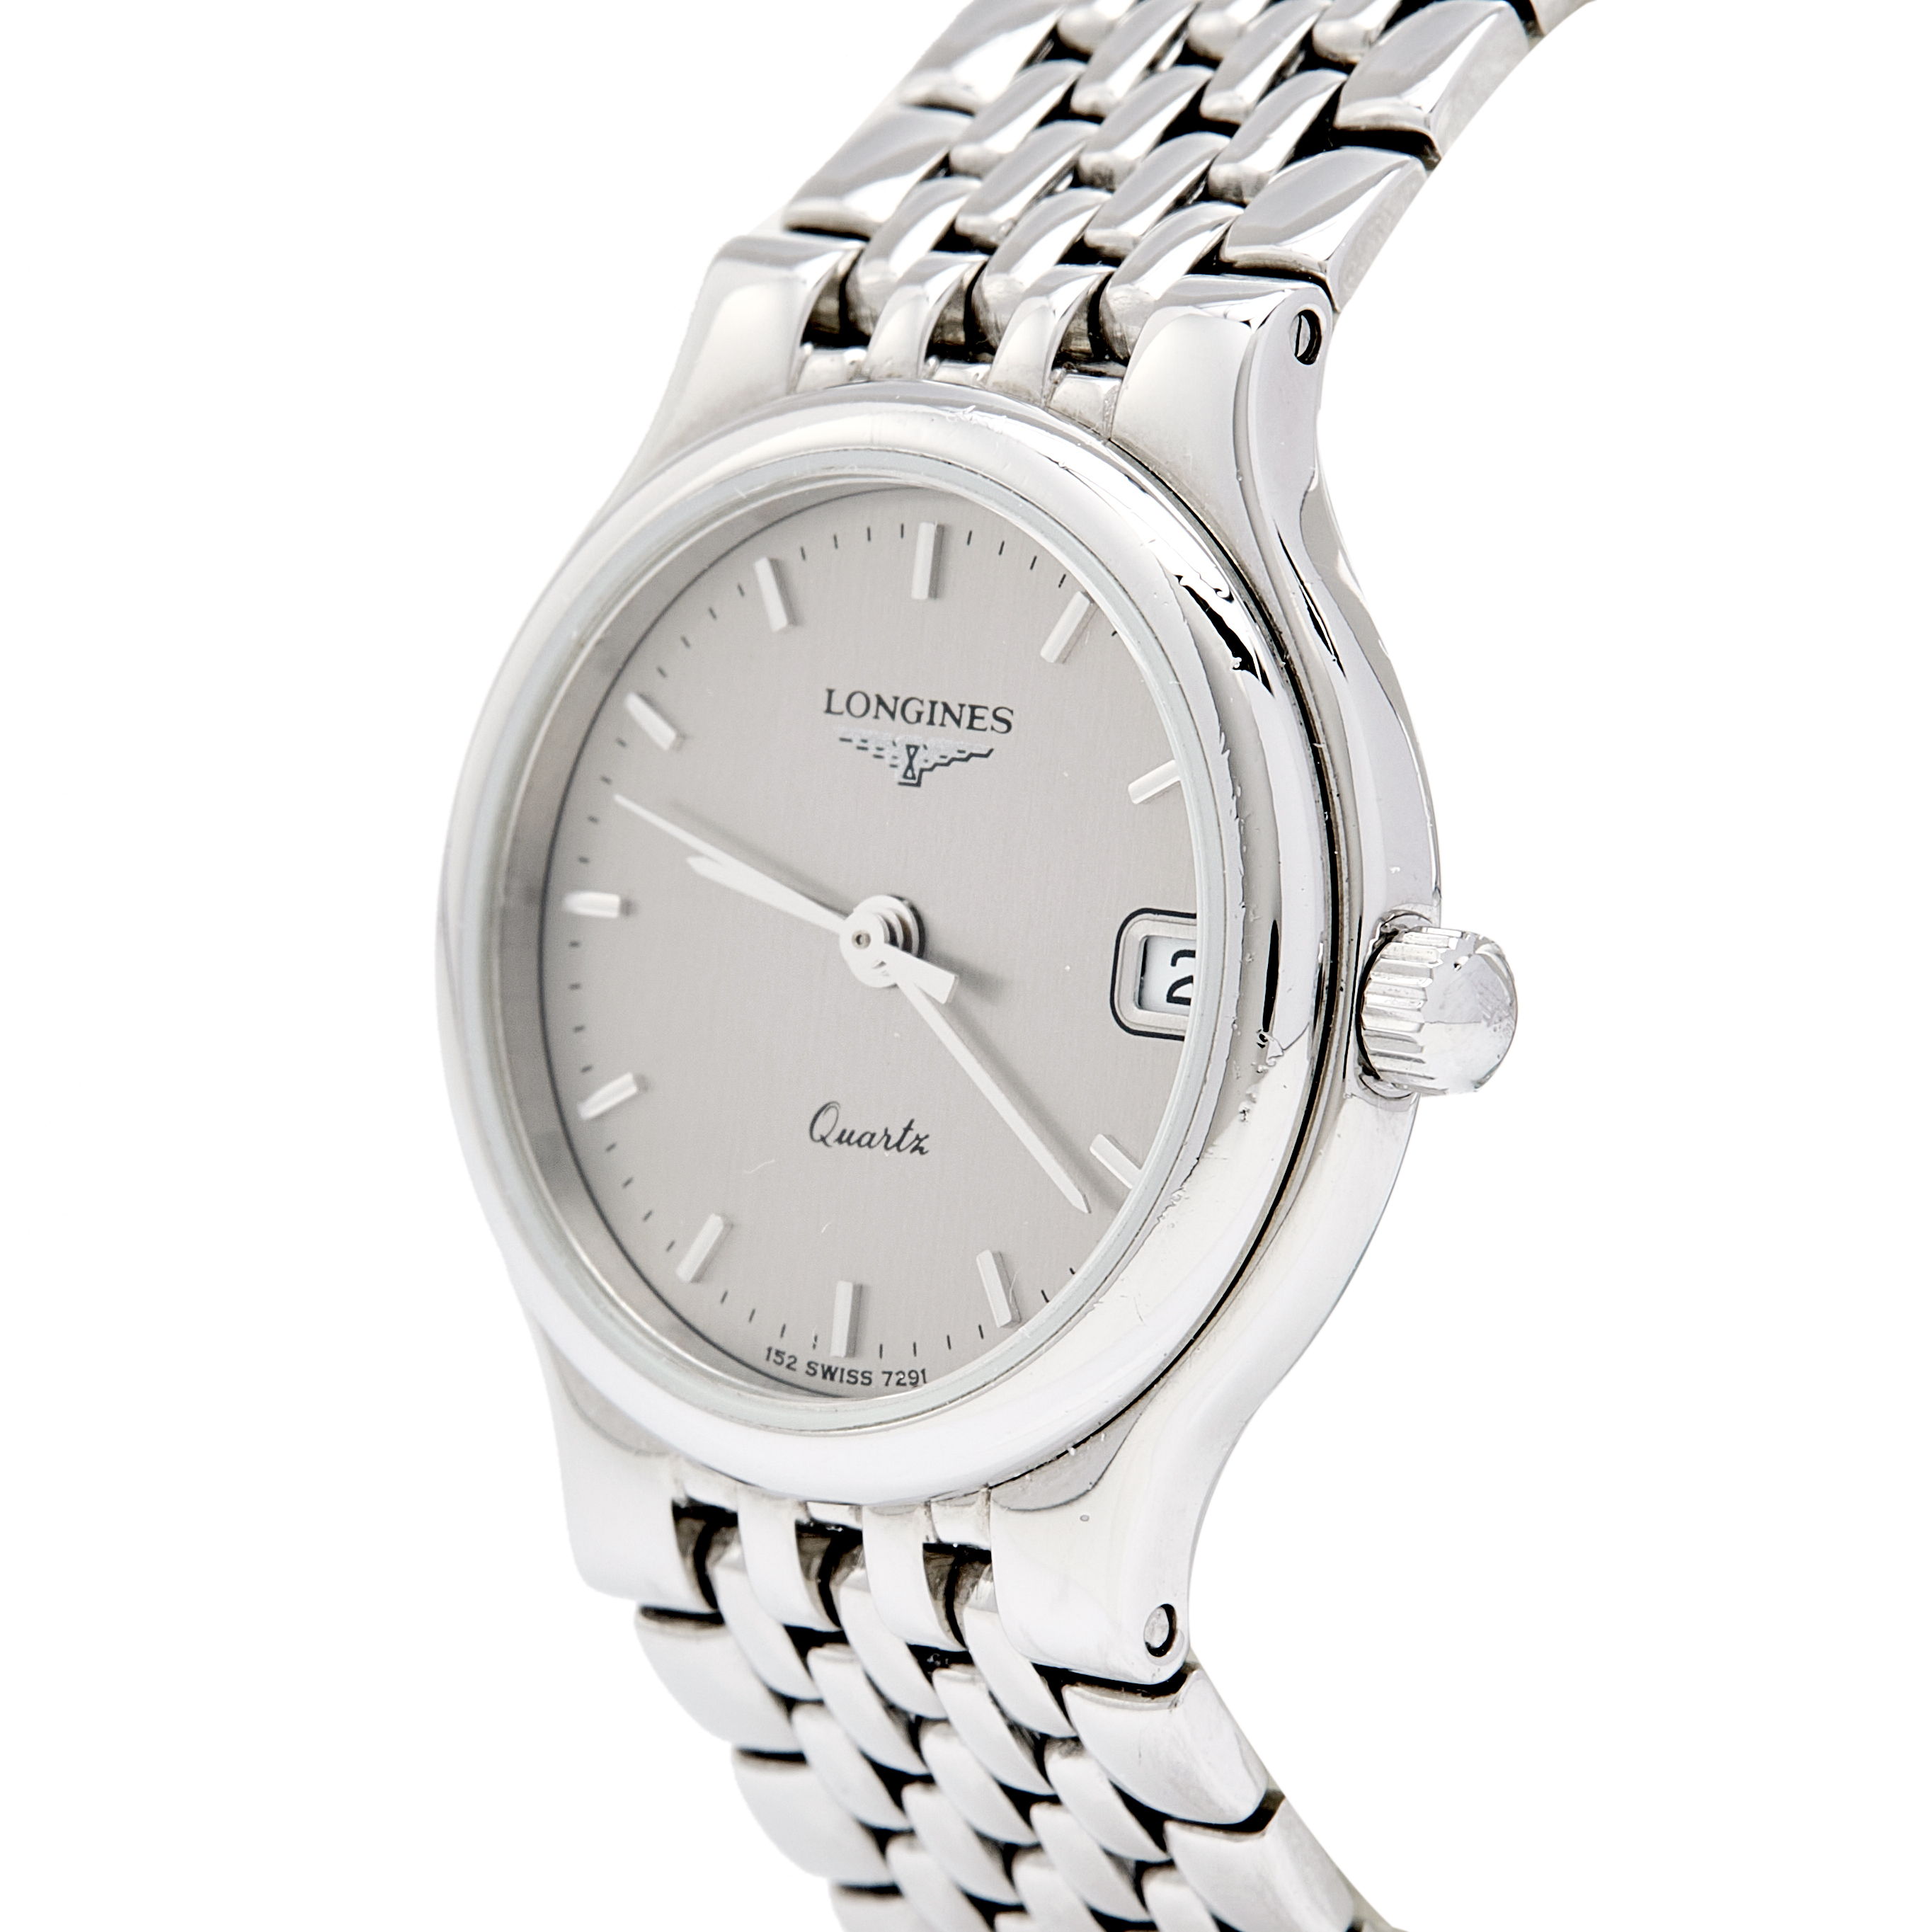 Longines Grey Stainless Steel Flagship 7291 Women's Wristwatch 23 mm